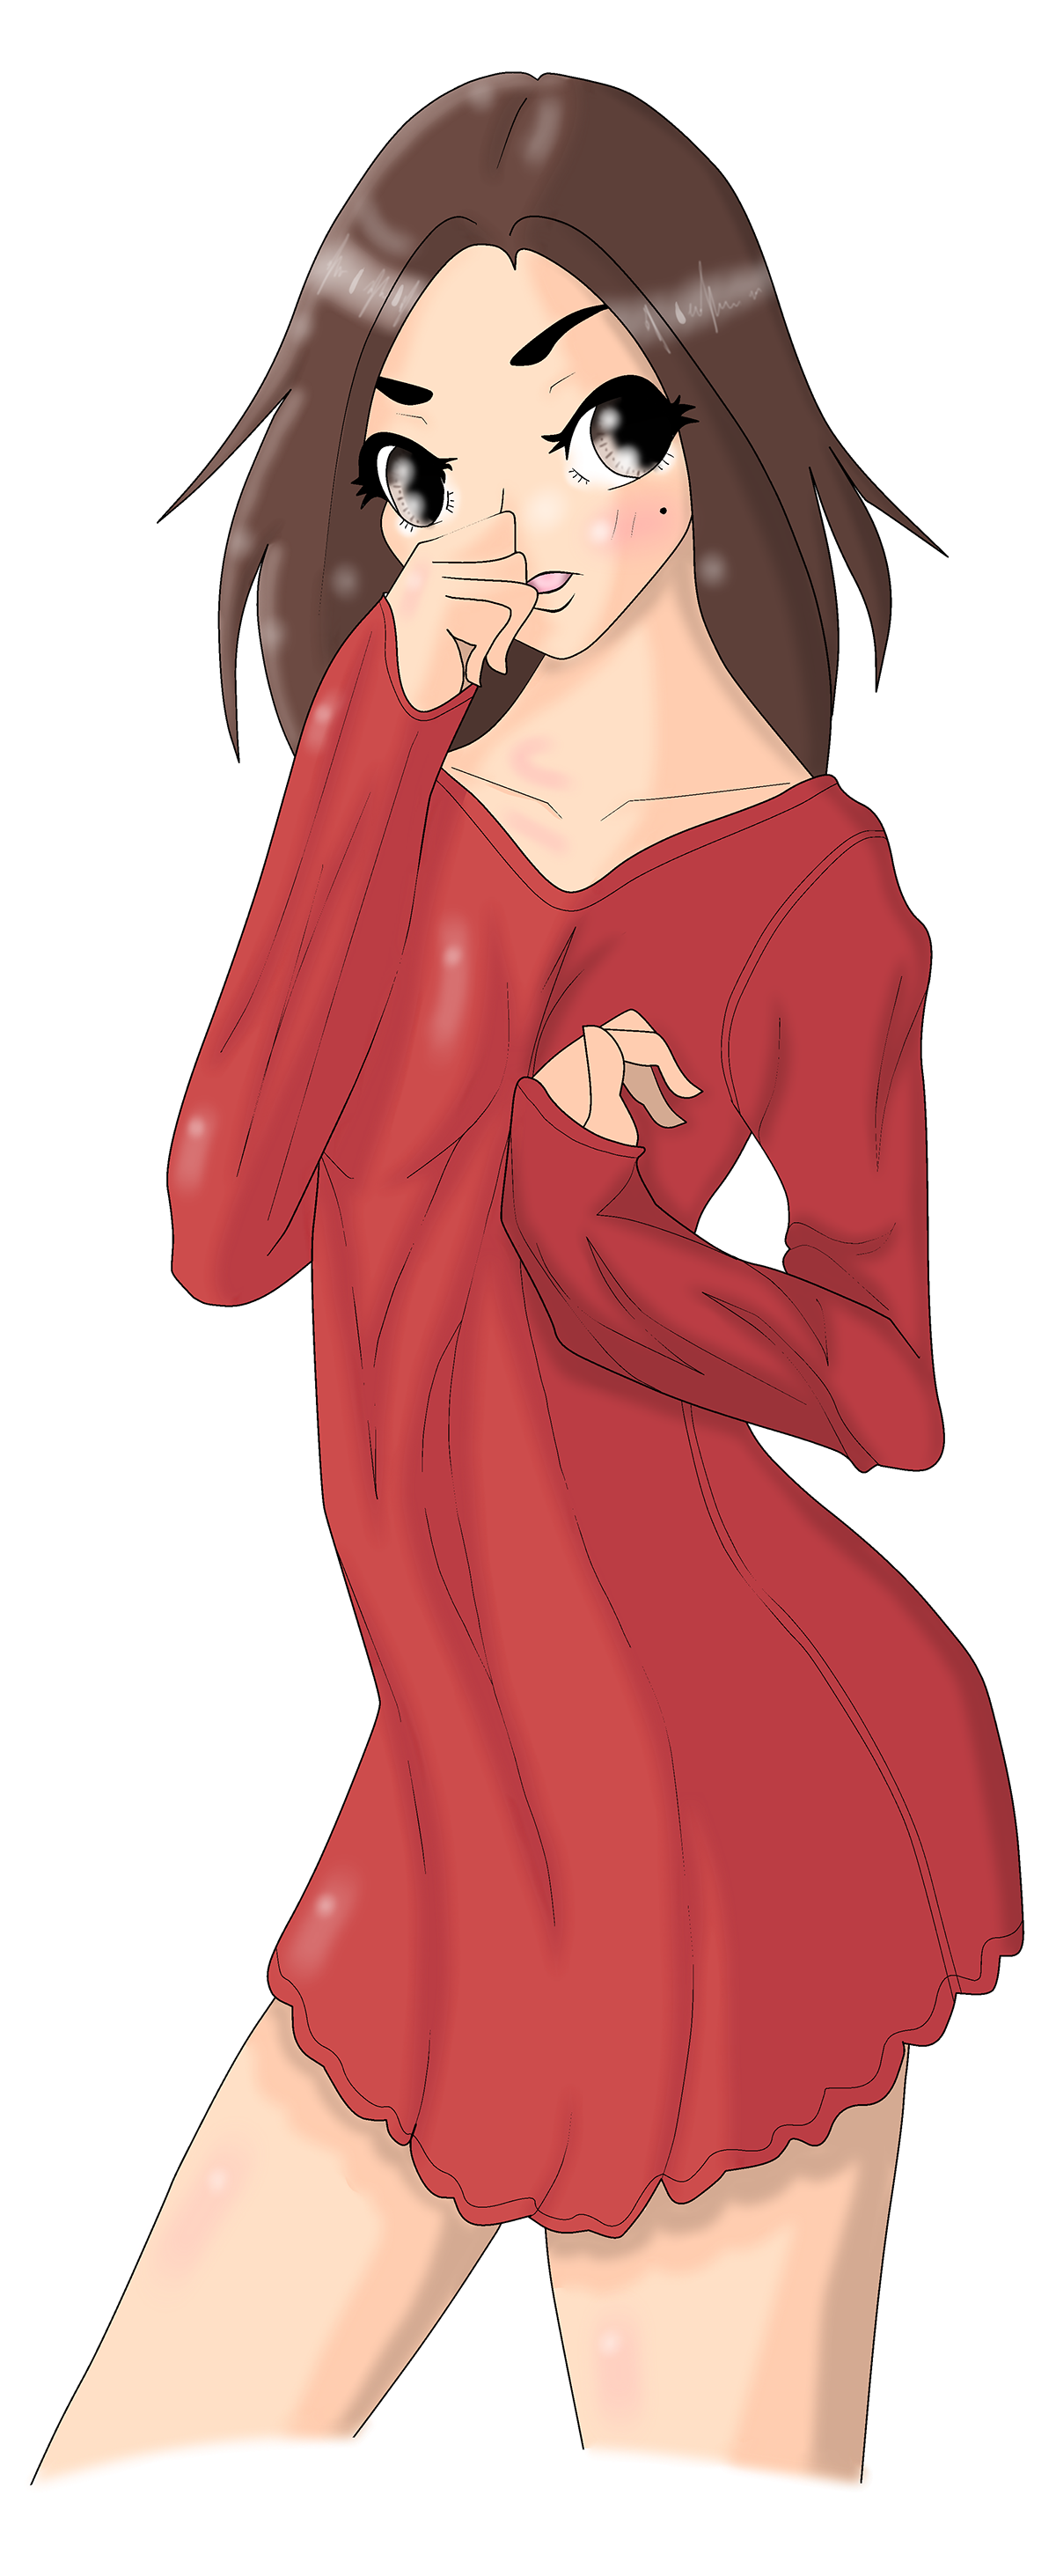 Manga Style girl Red shirt